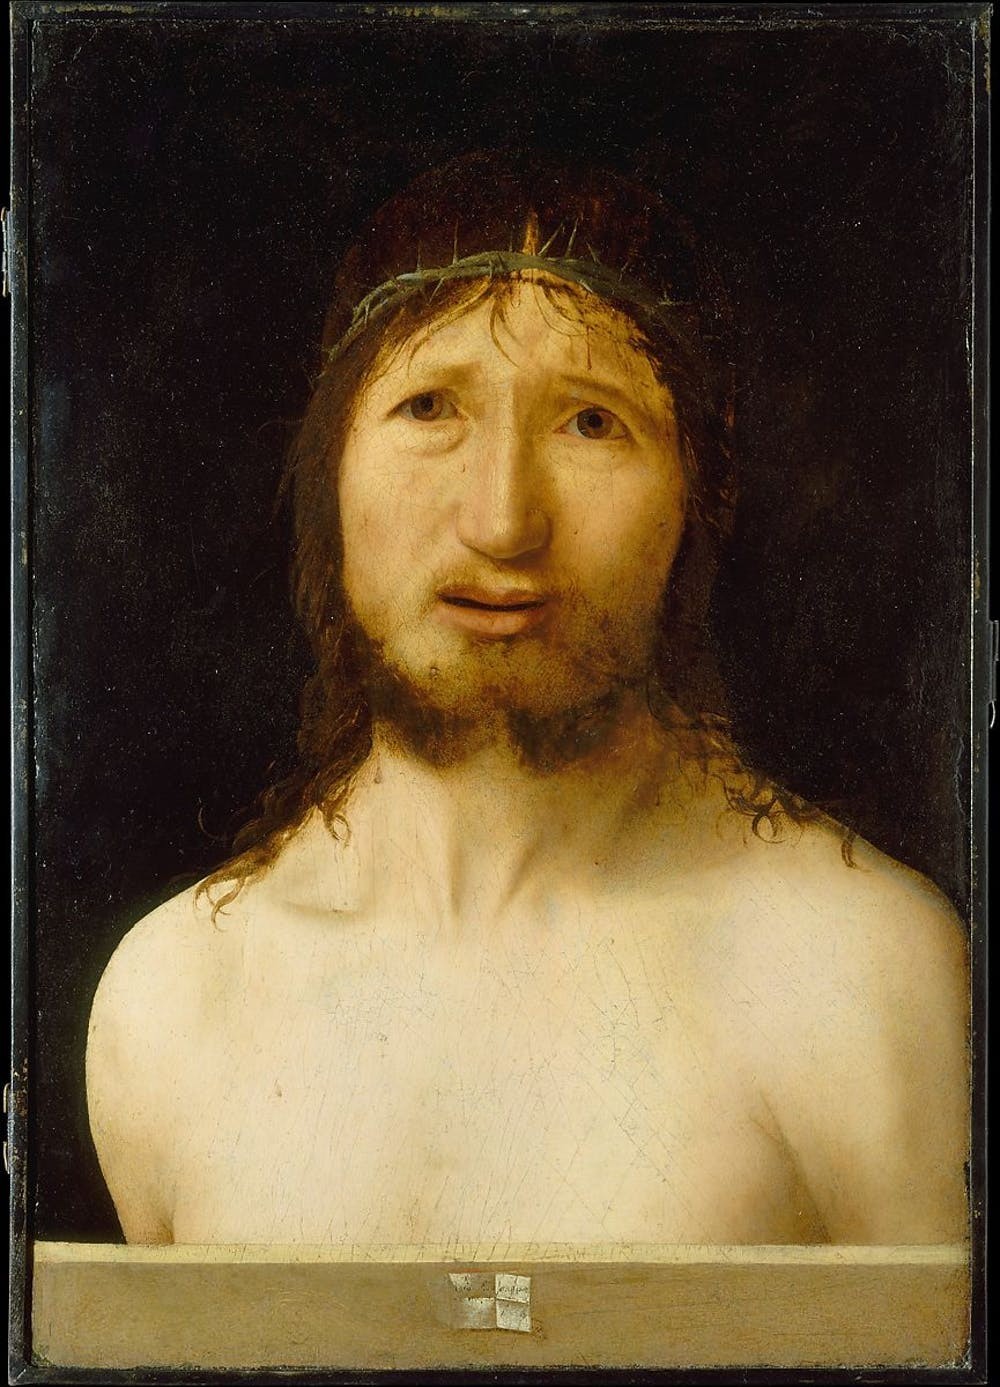 Cristo coroado com espinhos, de Antonello da Messina, 1470. (Foto: MetMuseum/Wikimedia Commons)